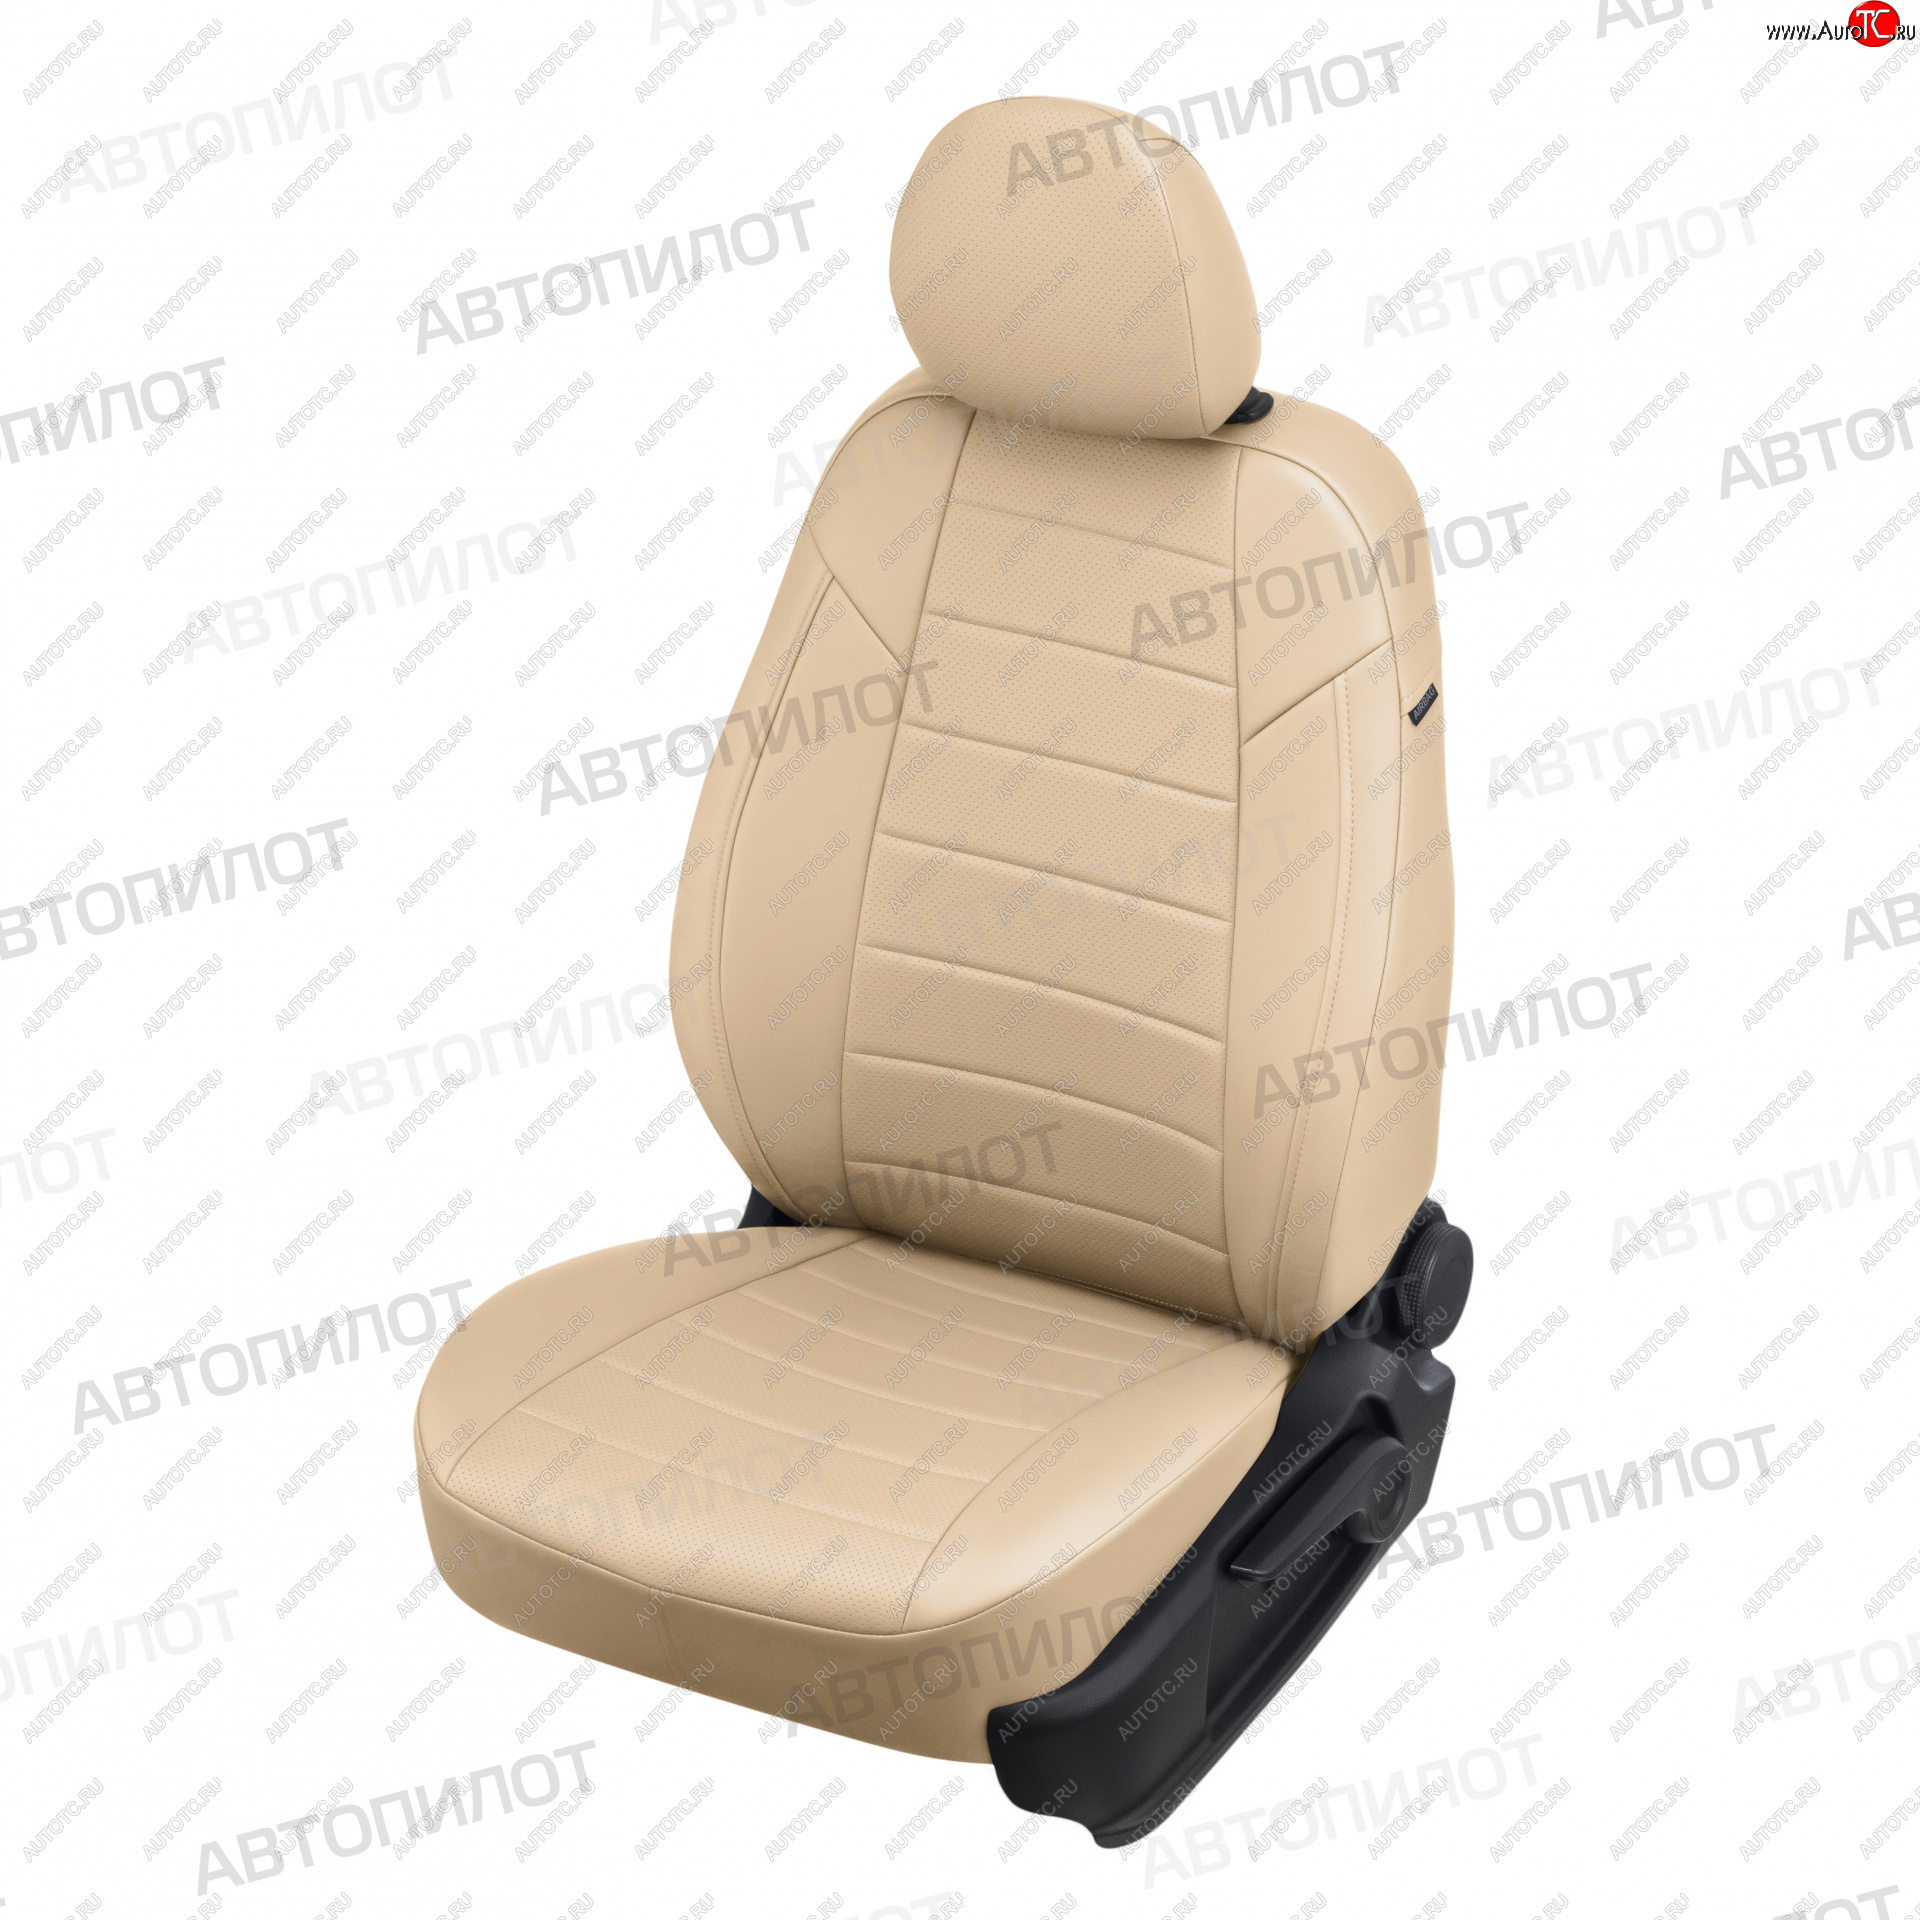 7 499 р. Чехлы сидений (экокожа) Автопилот  KIA Sportage  3 SL (2010-2016) (бежевый)